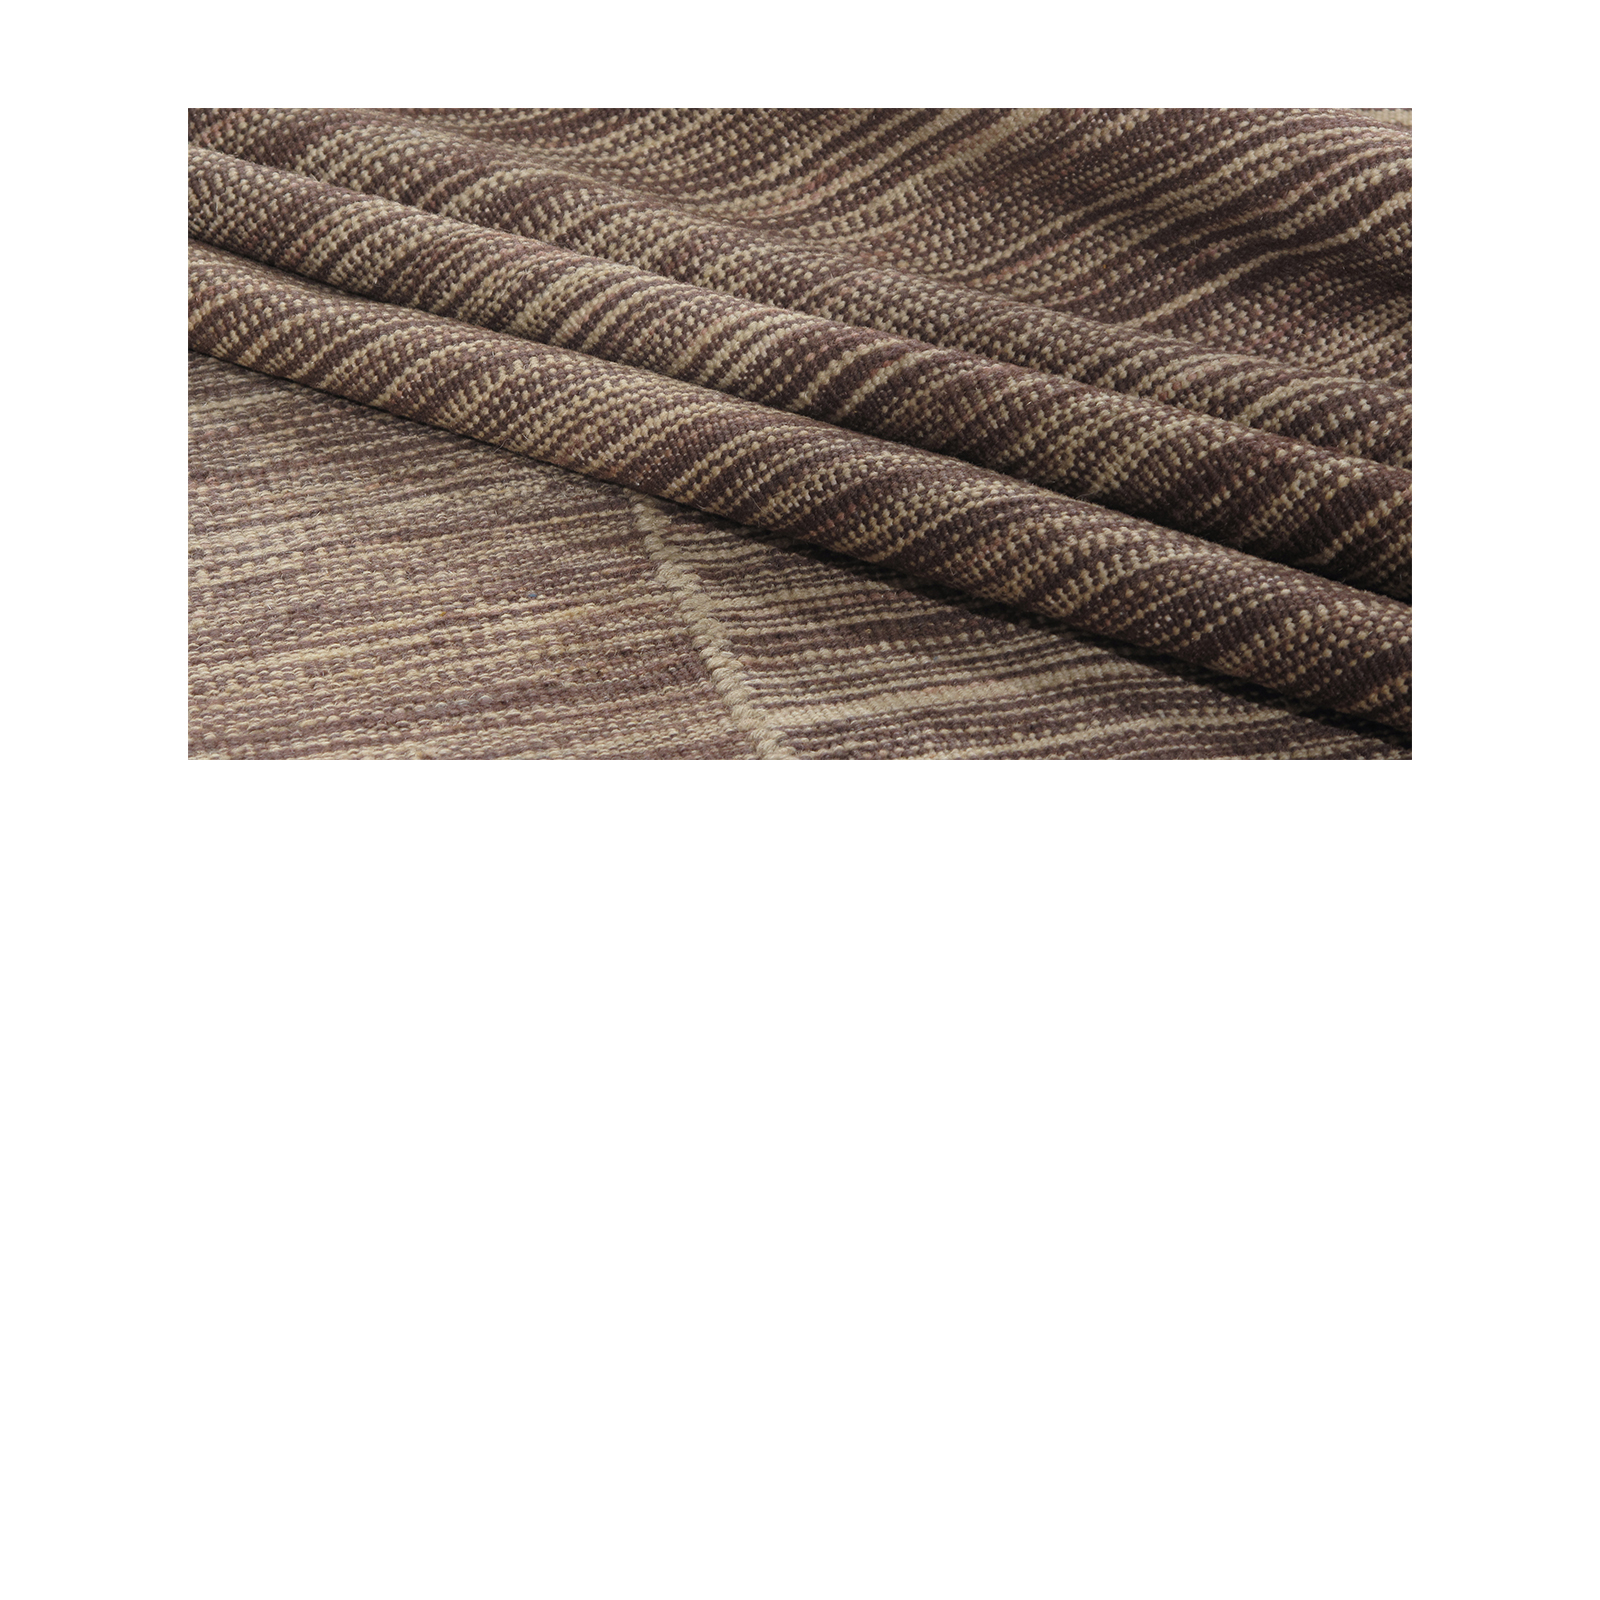 Mazandaran flatweave rug is handwoven and made of 100% wool.